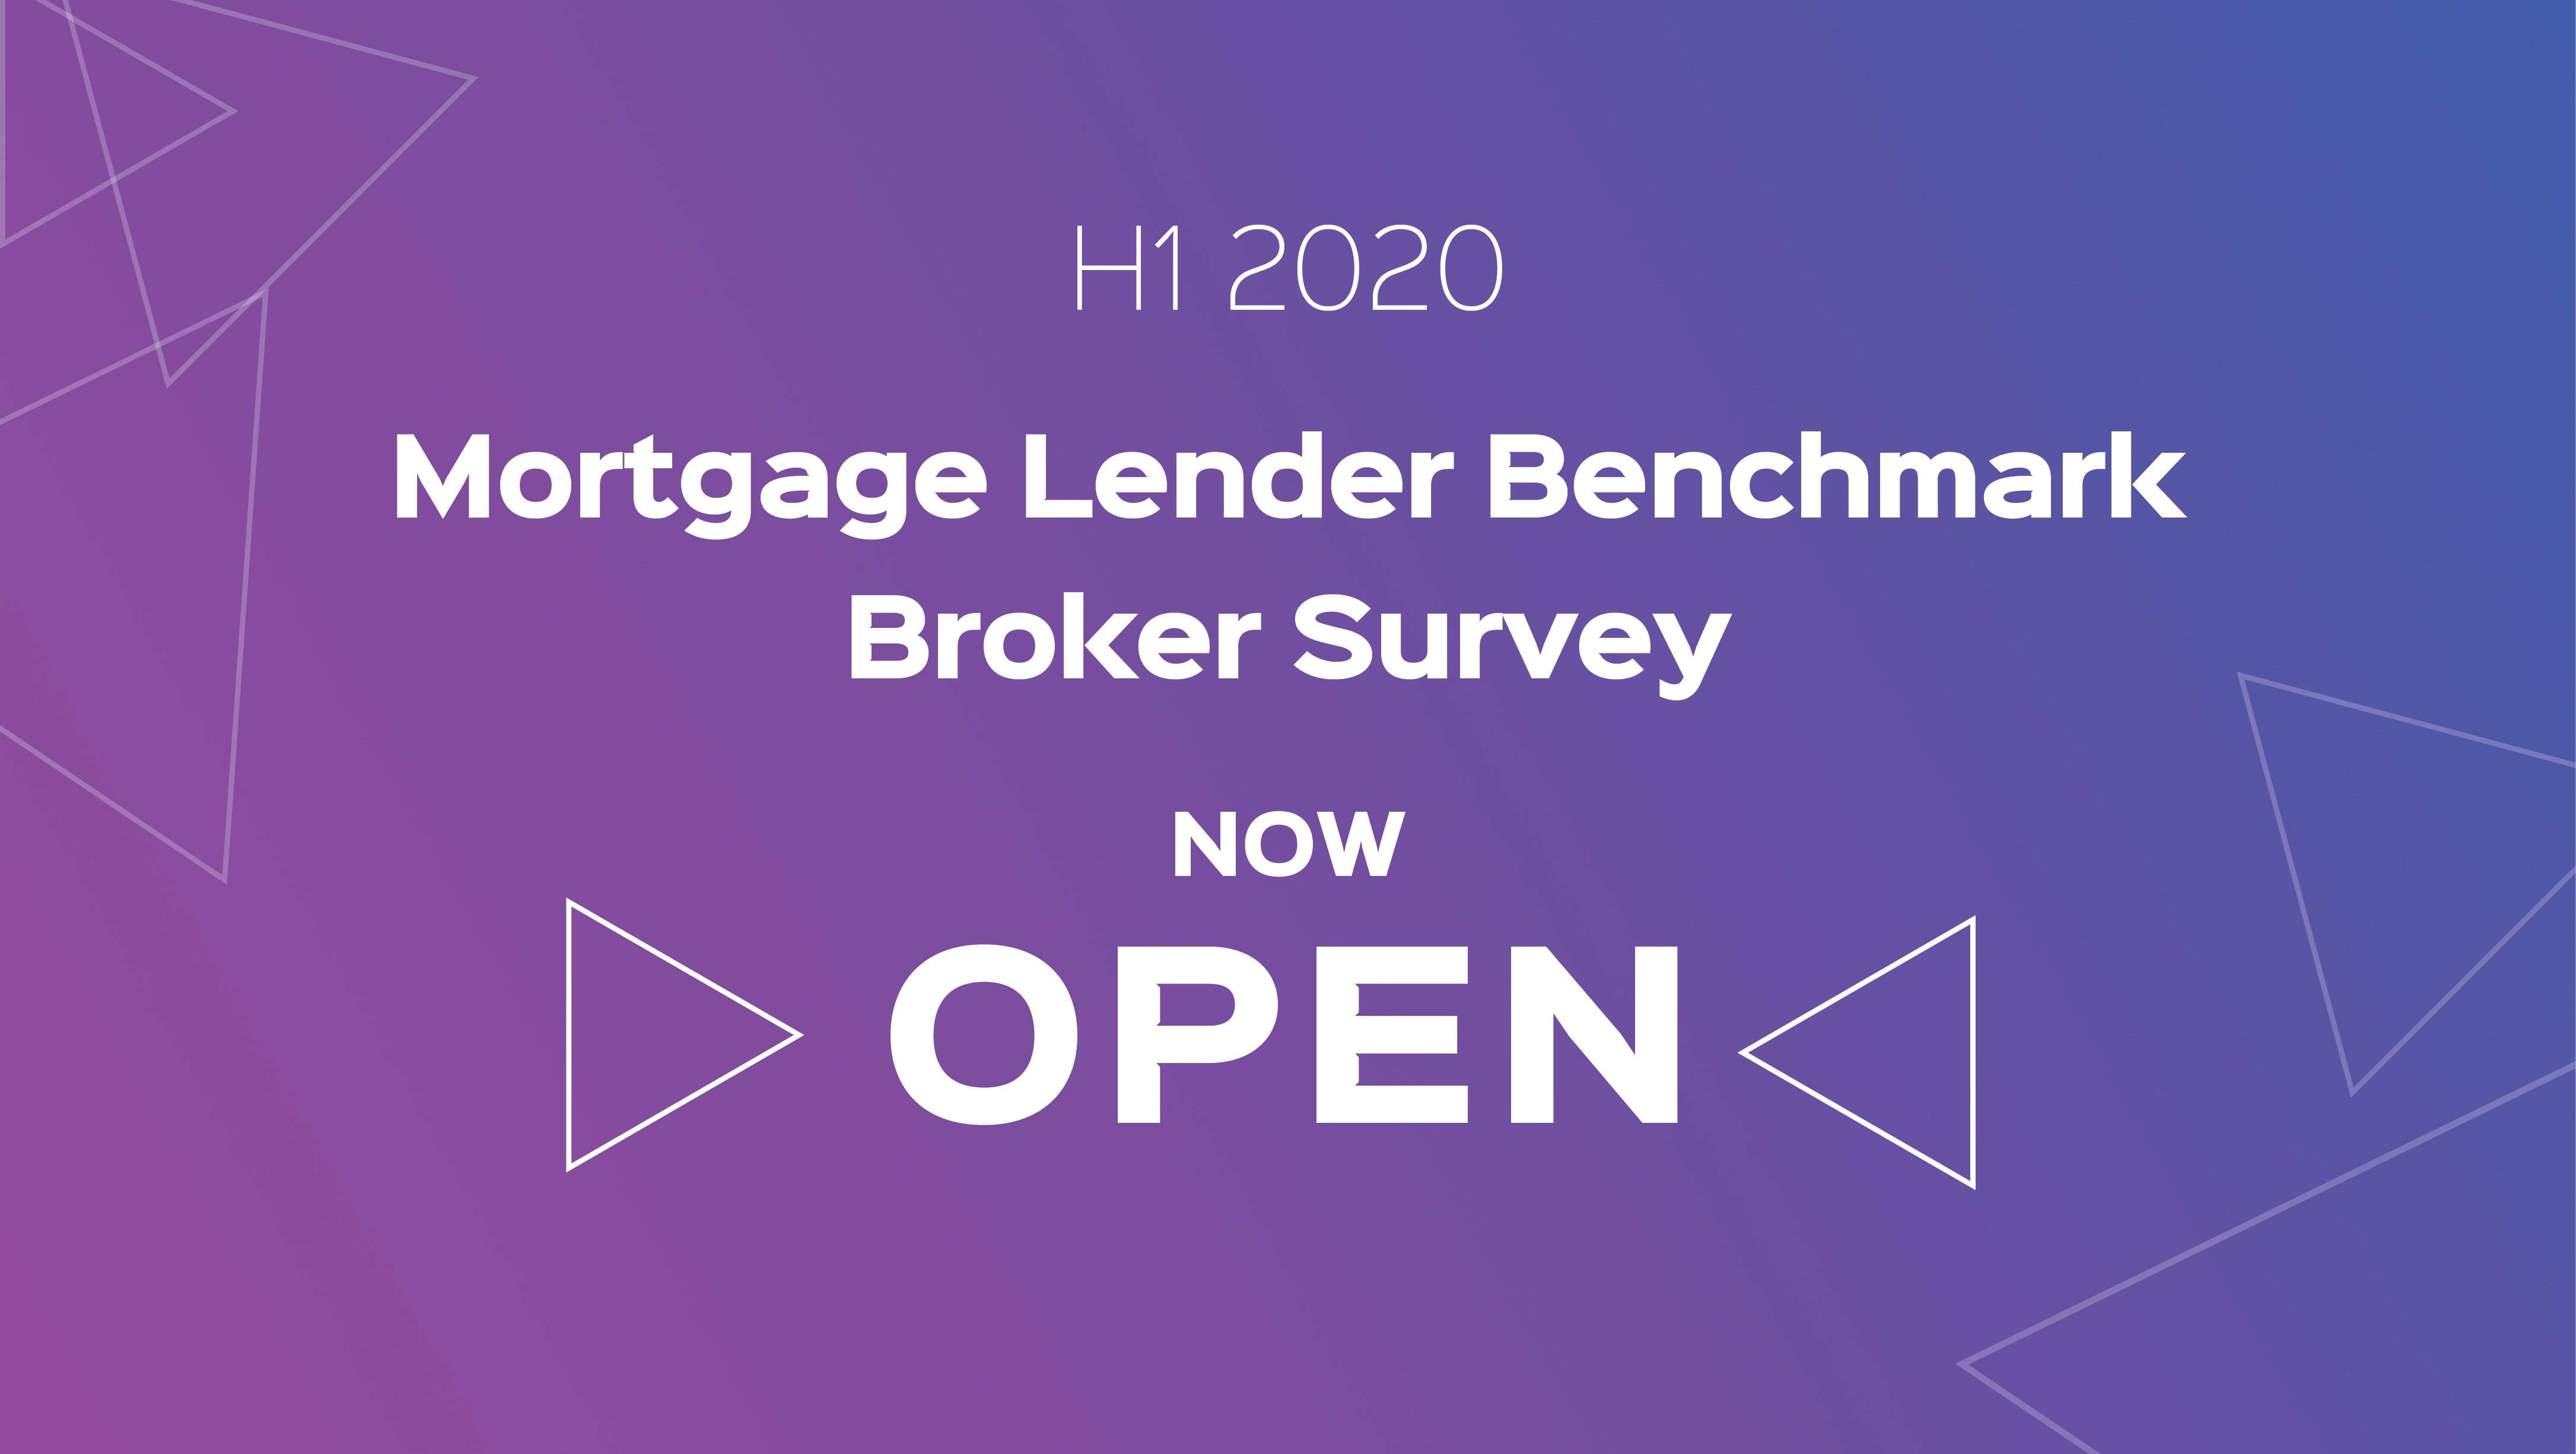 Mortgage Lender Benchmark H1 2020: Survey Open